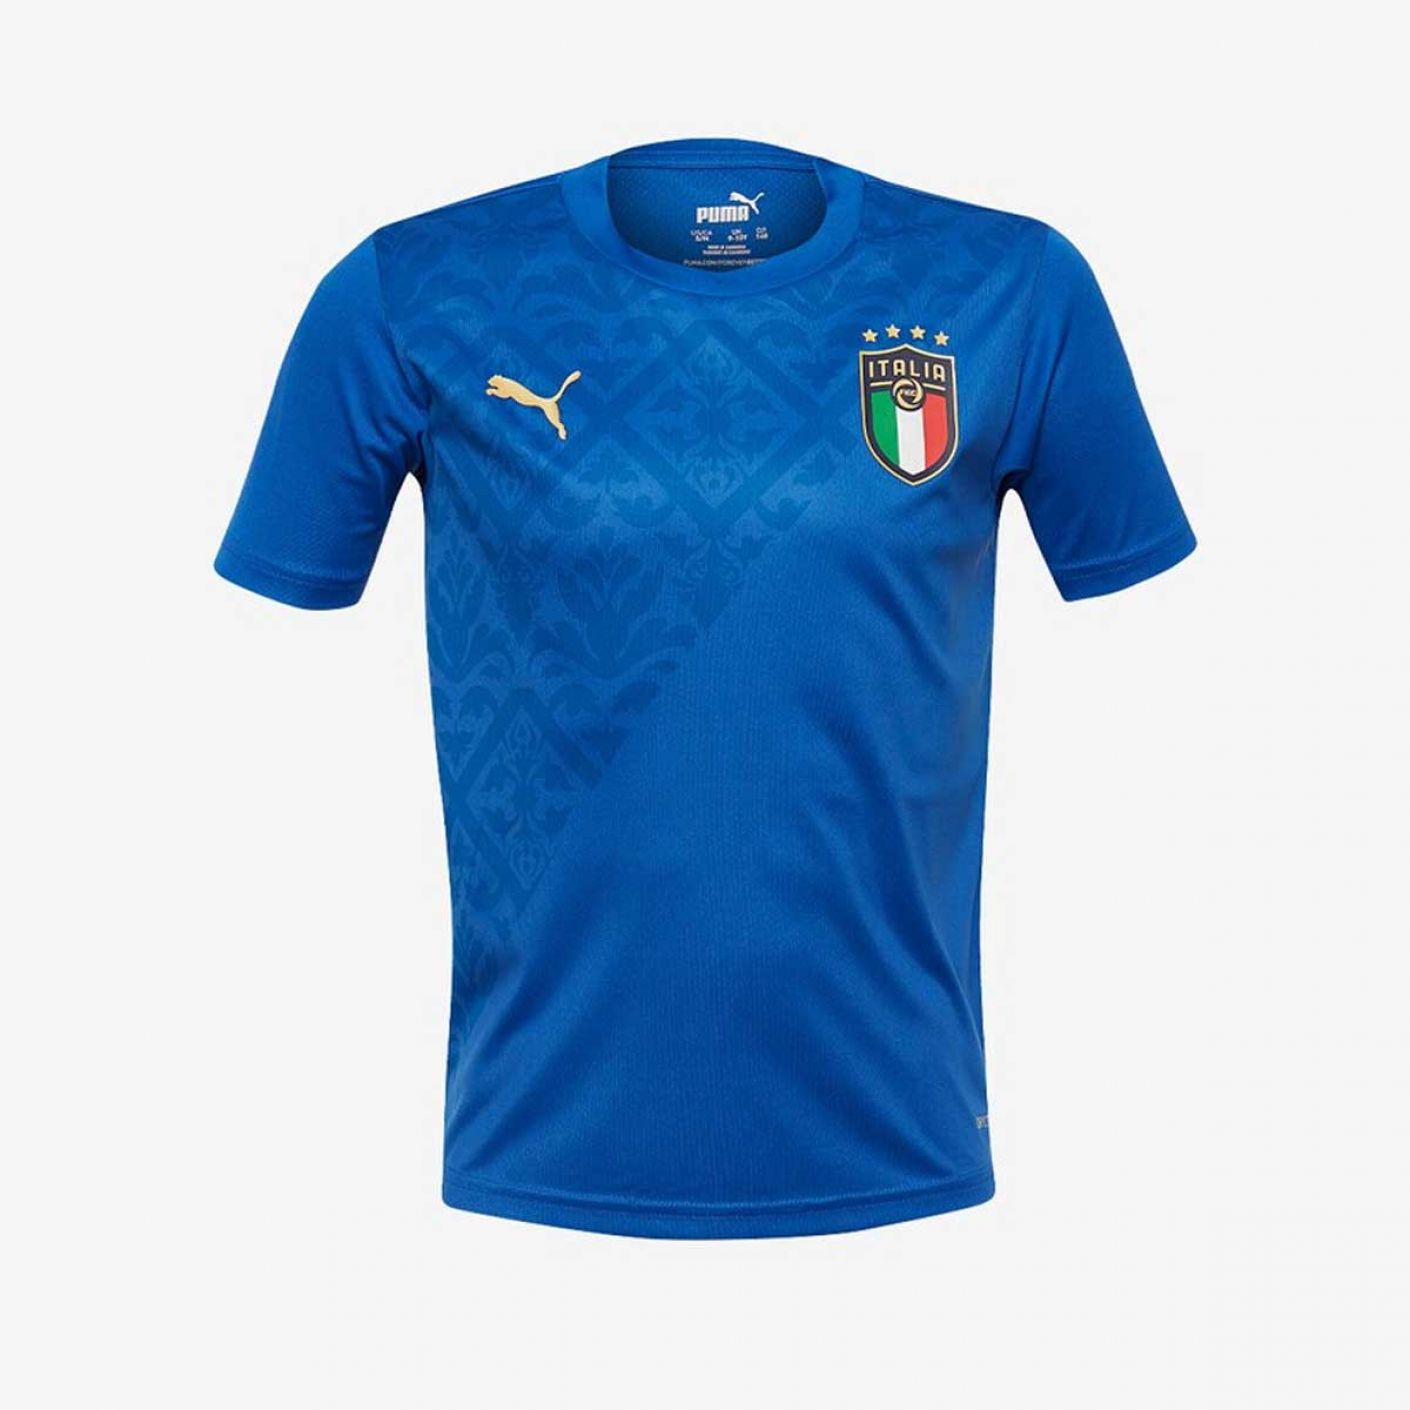 Puma T-shirt Figc Italia Ufficiale 2020-2021 da Bambino